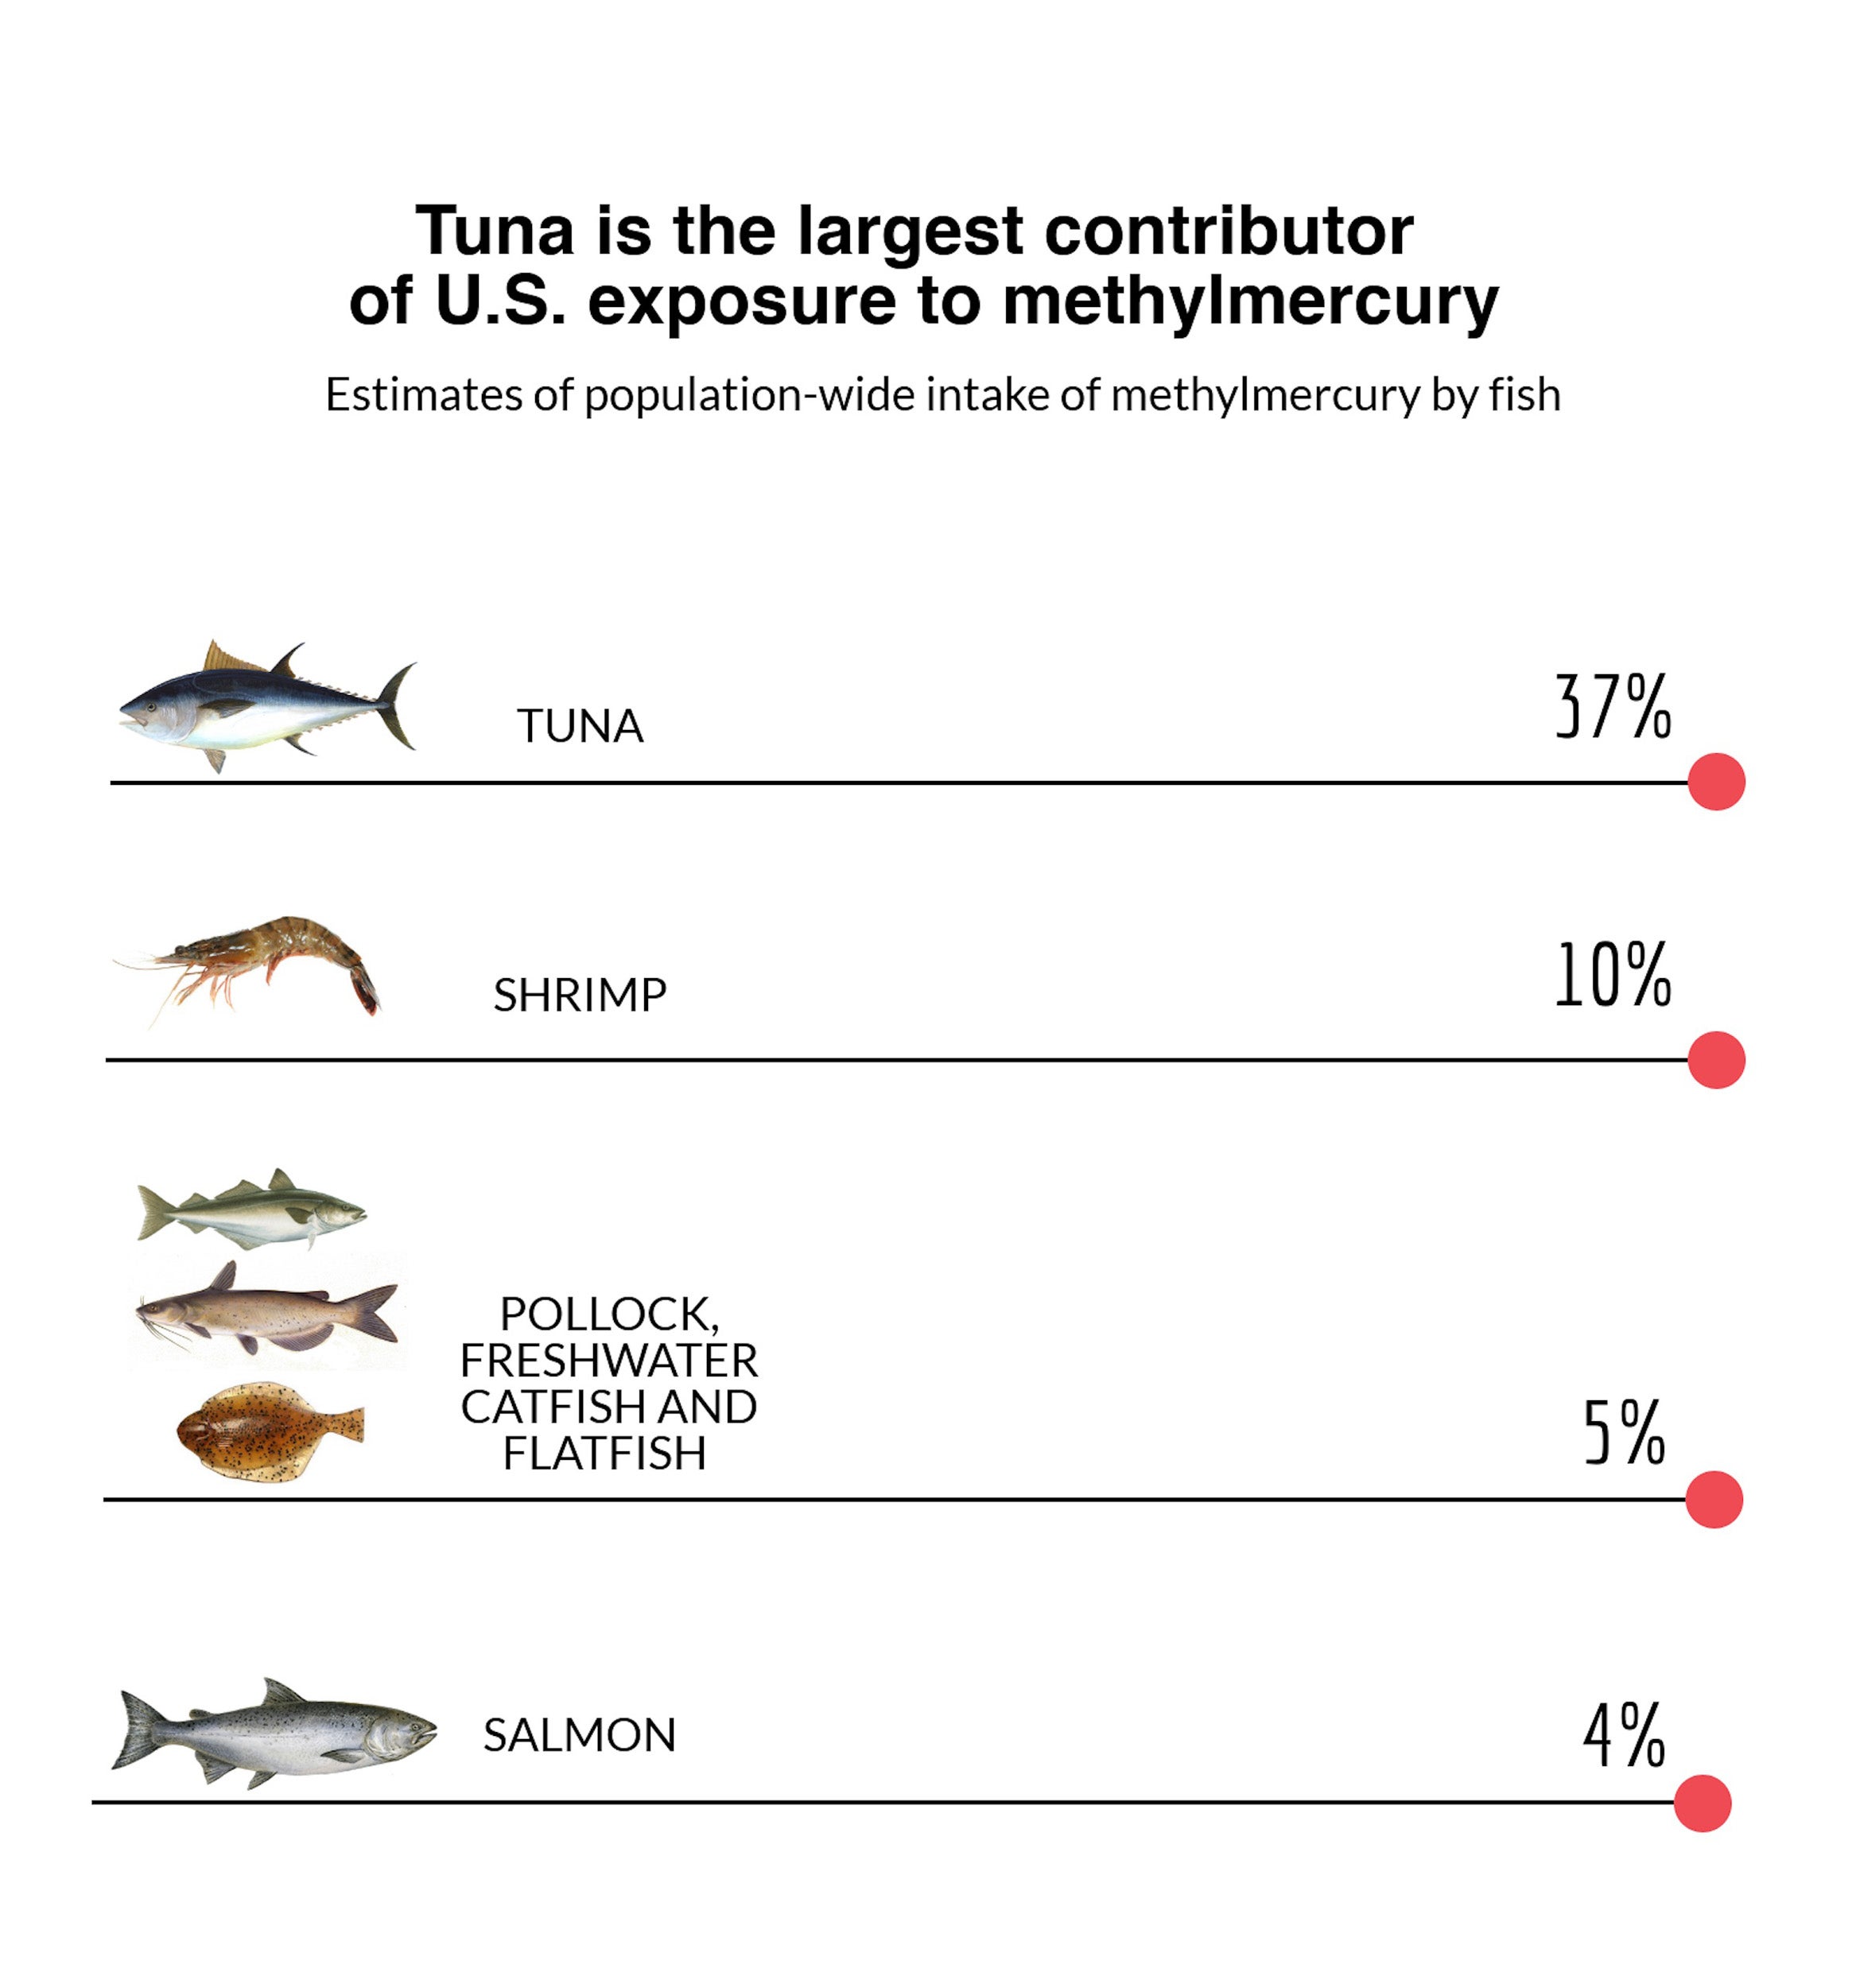 Mercury Levels In Fish Chart